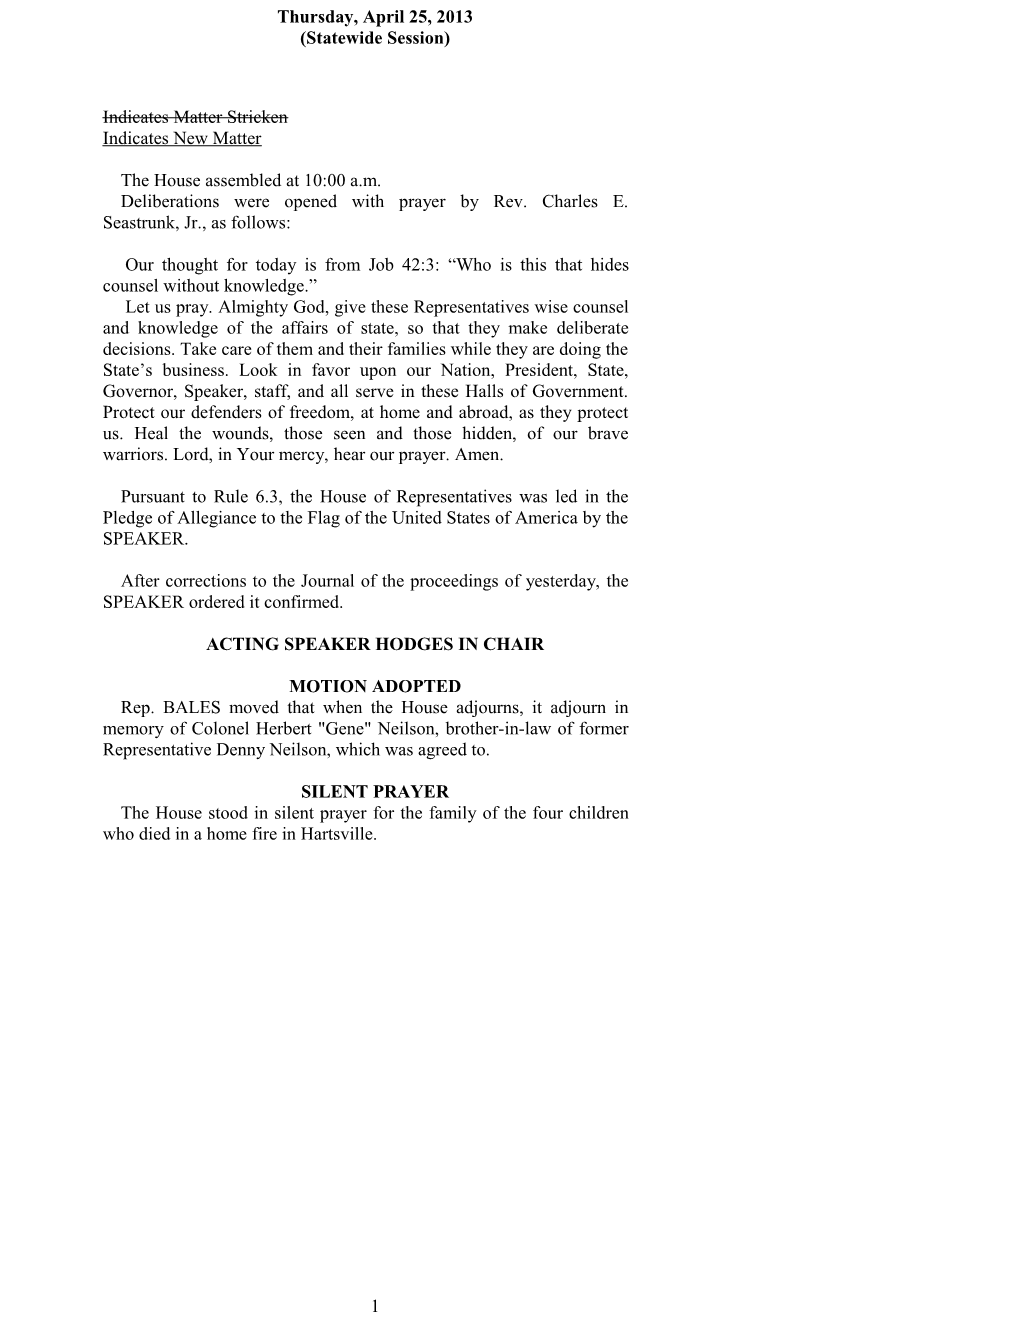 House Journal for Apr. 25, 2013 - South Carolina Legislature Online